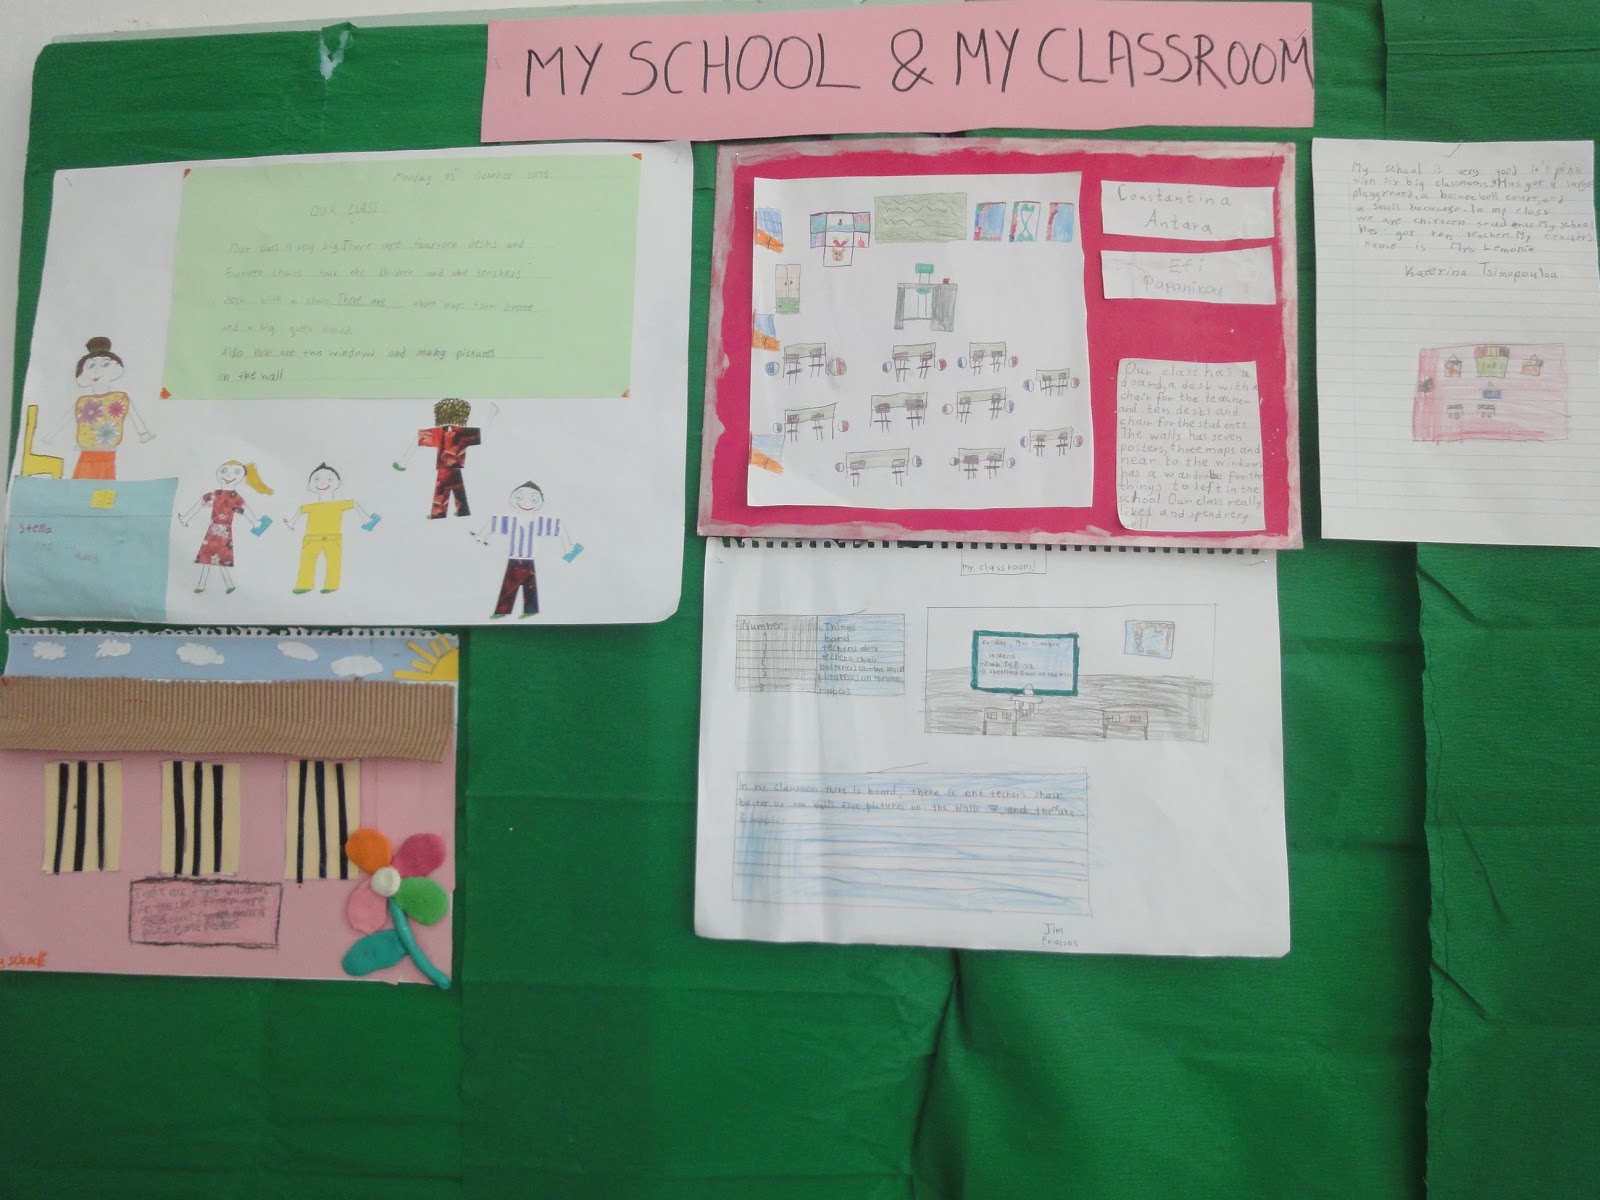 English Rocket: Platanorevma 4th grade project: My School & My Classroom